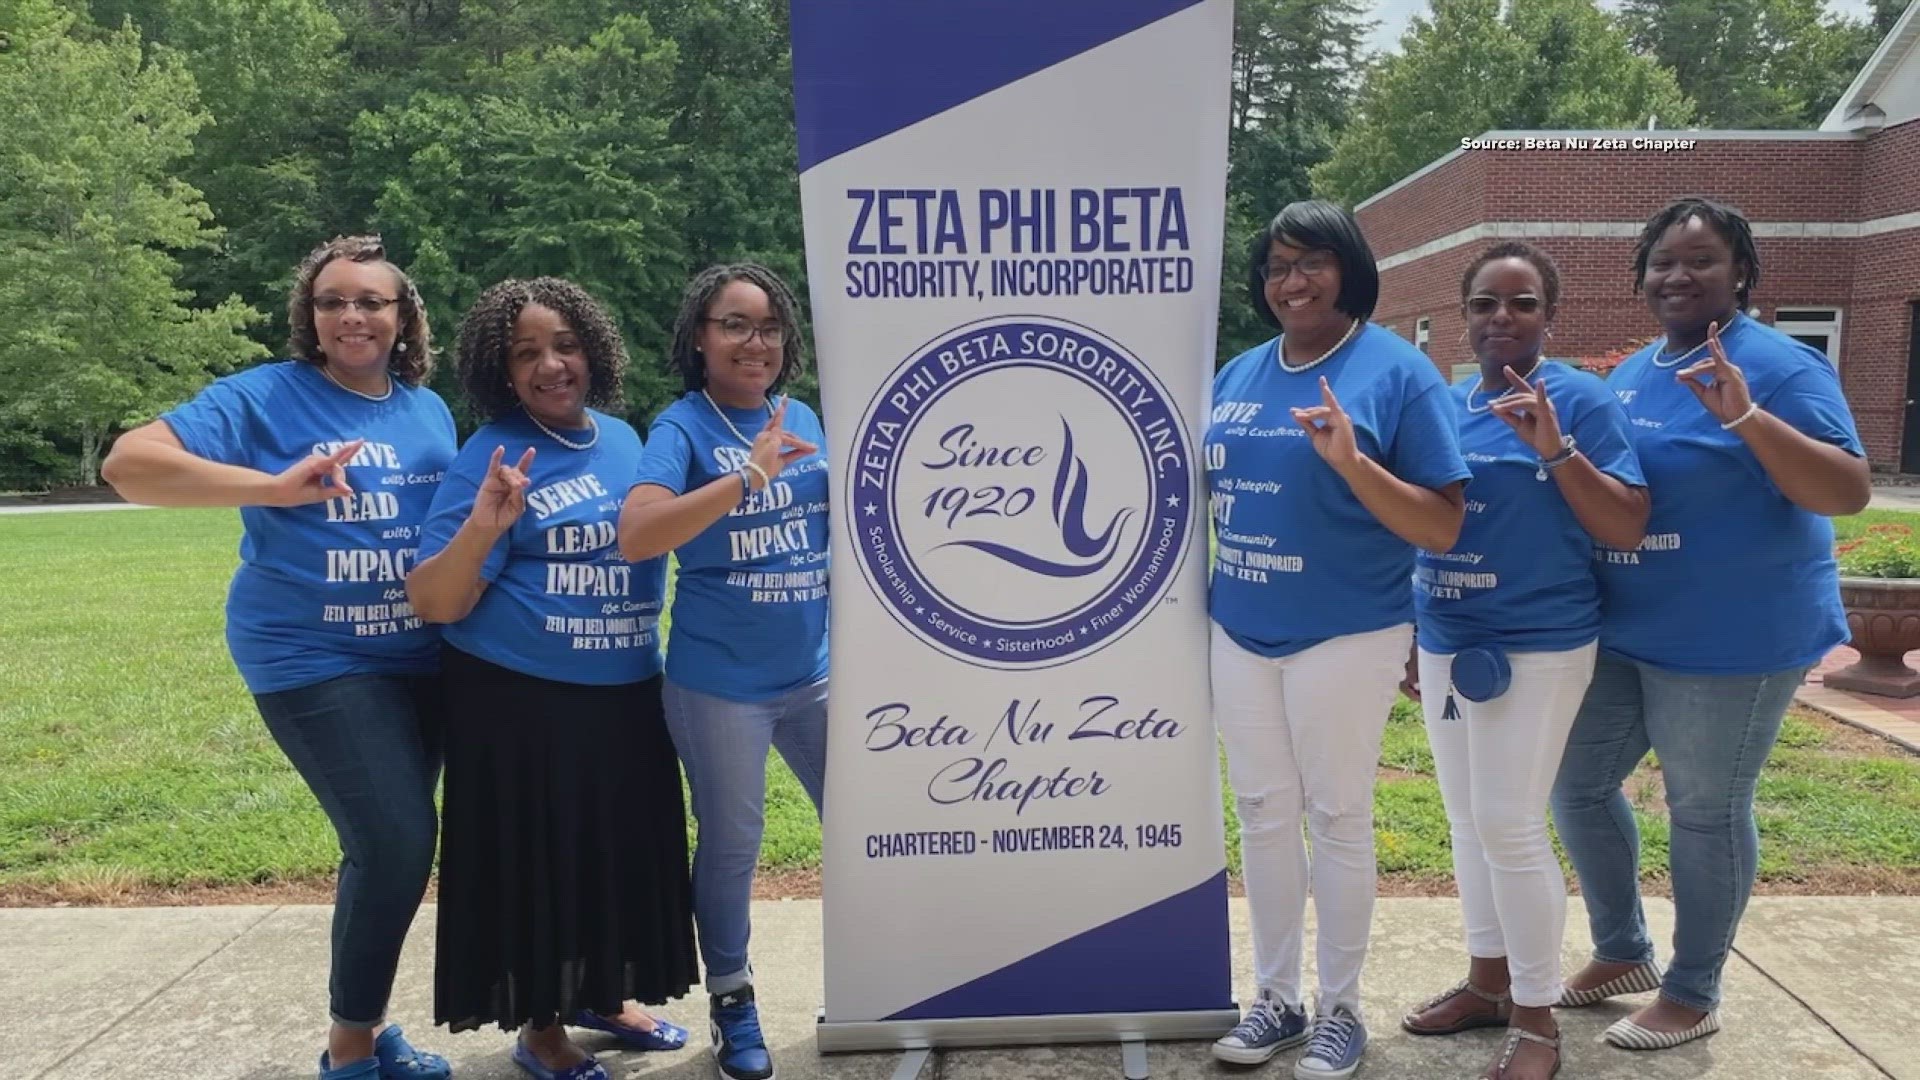 The Beta Nu Zeta Chapter of Zeta Phi Beta Sorority, Inc. is awarding five scholarships to Guilford County high school students.